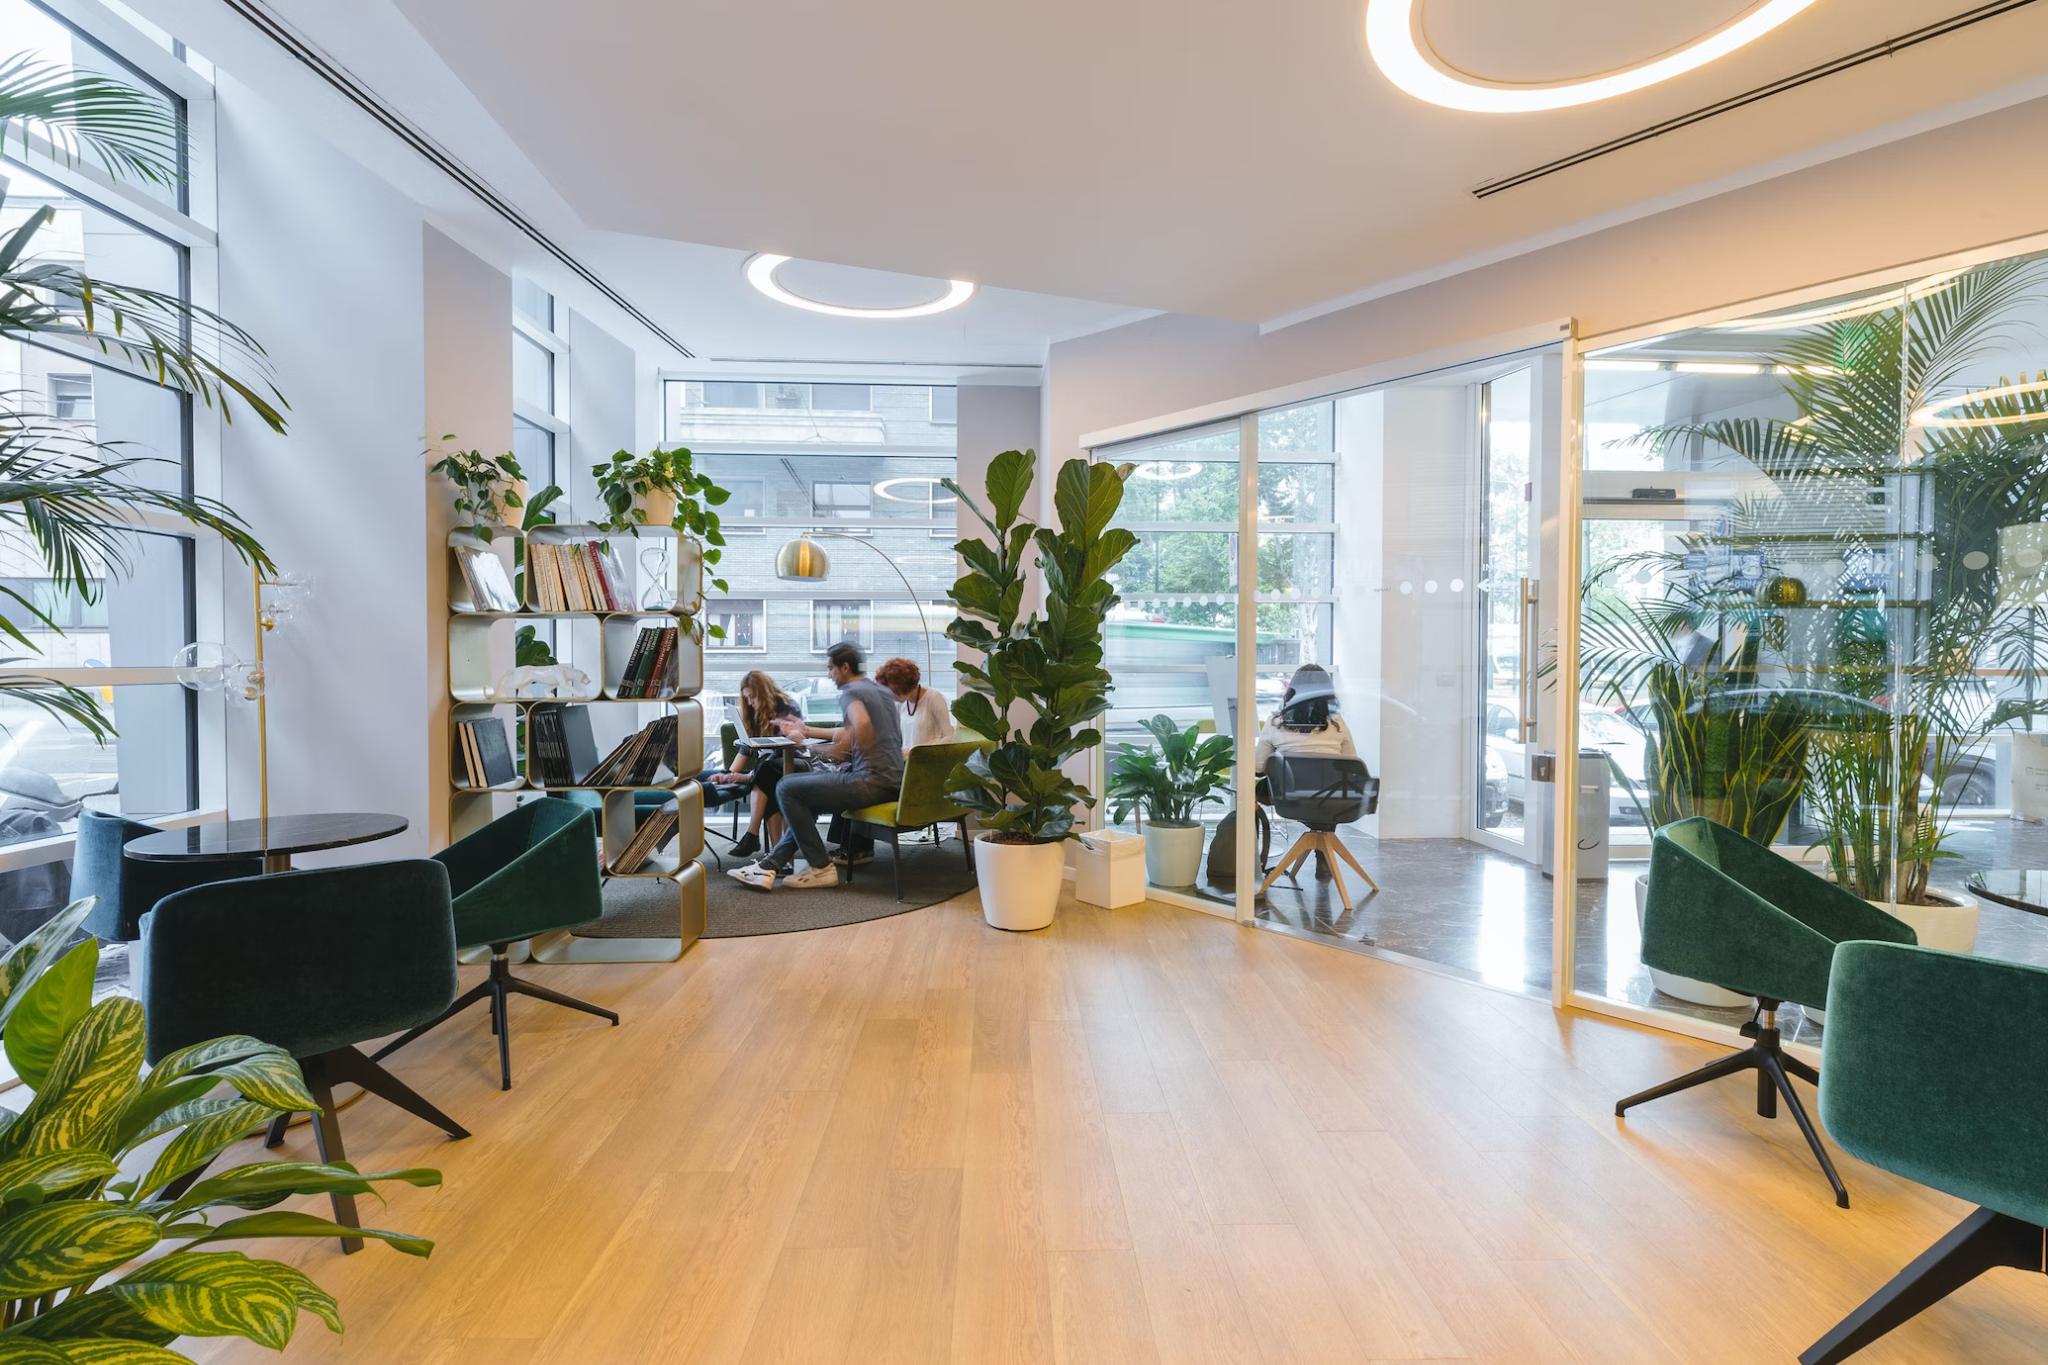 6 Office Interior Design Ideas You Can Consider